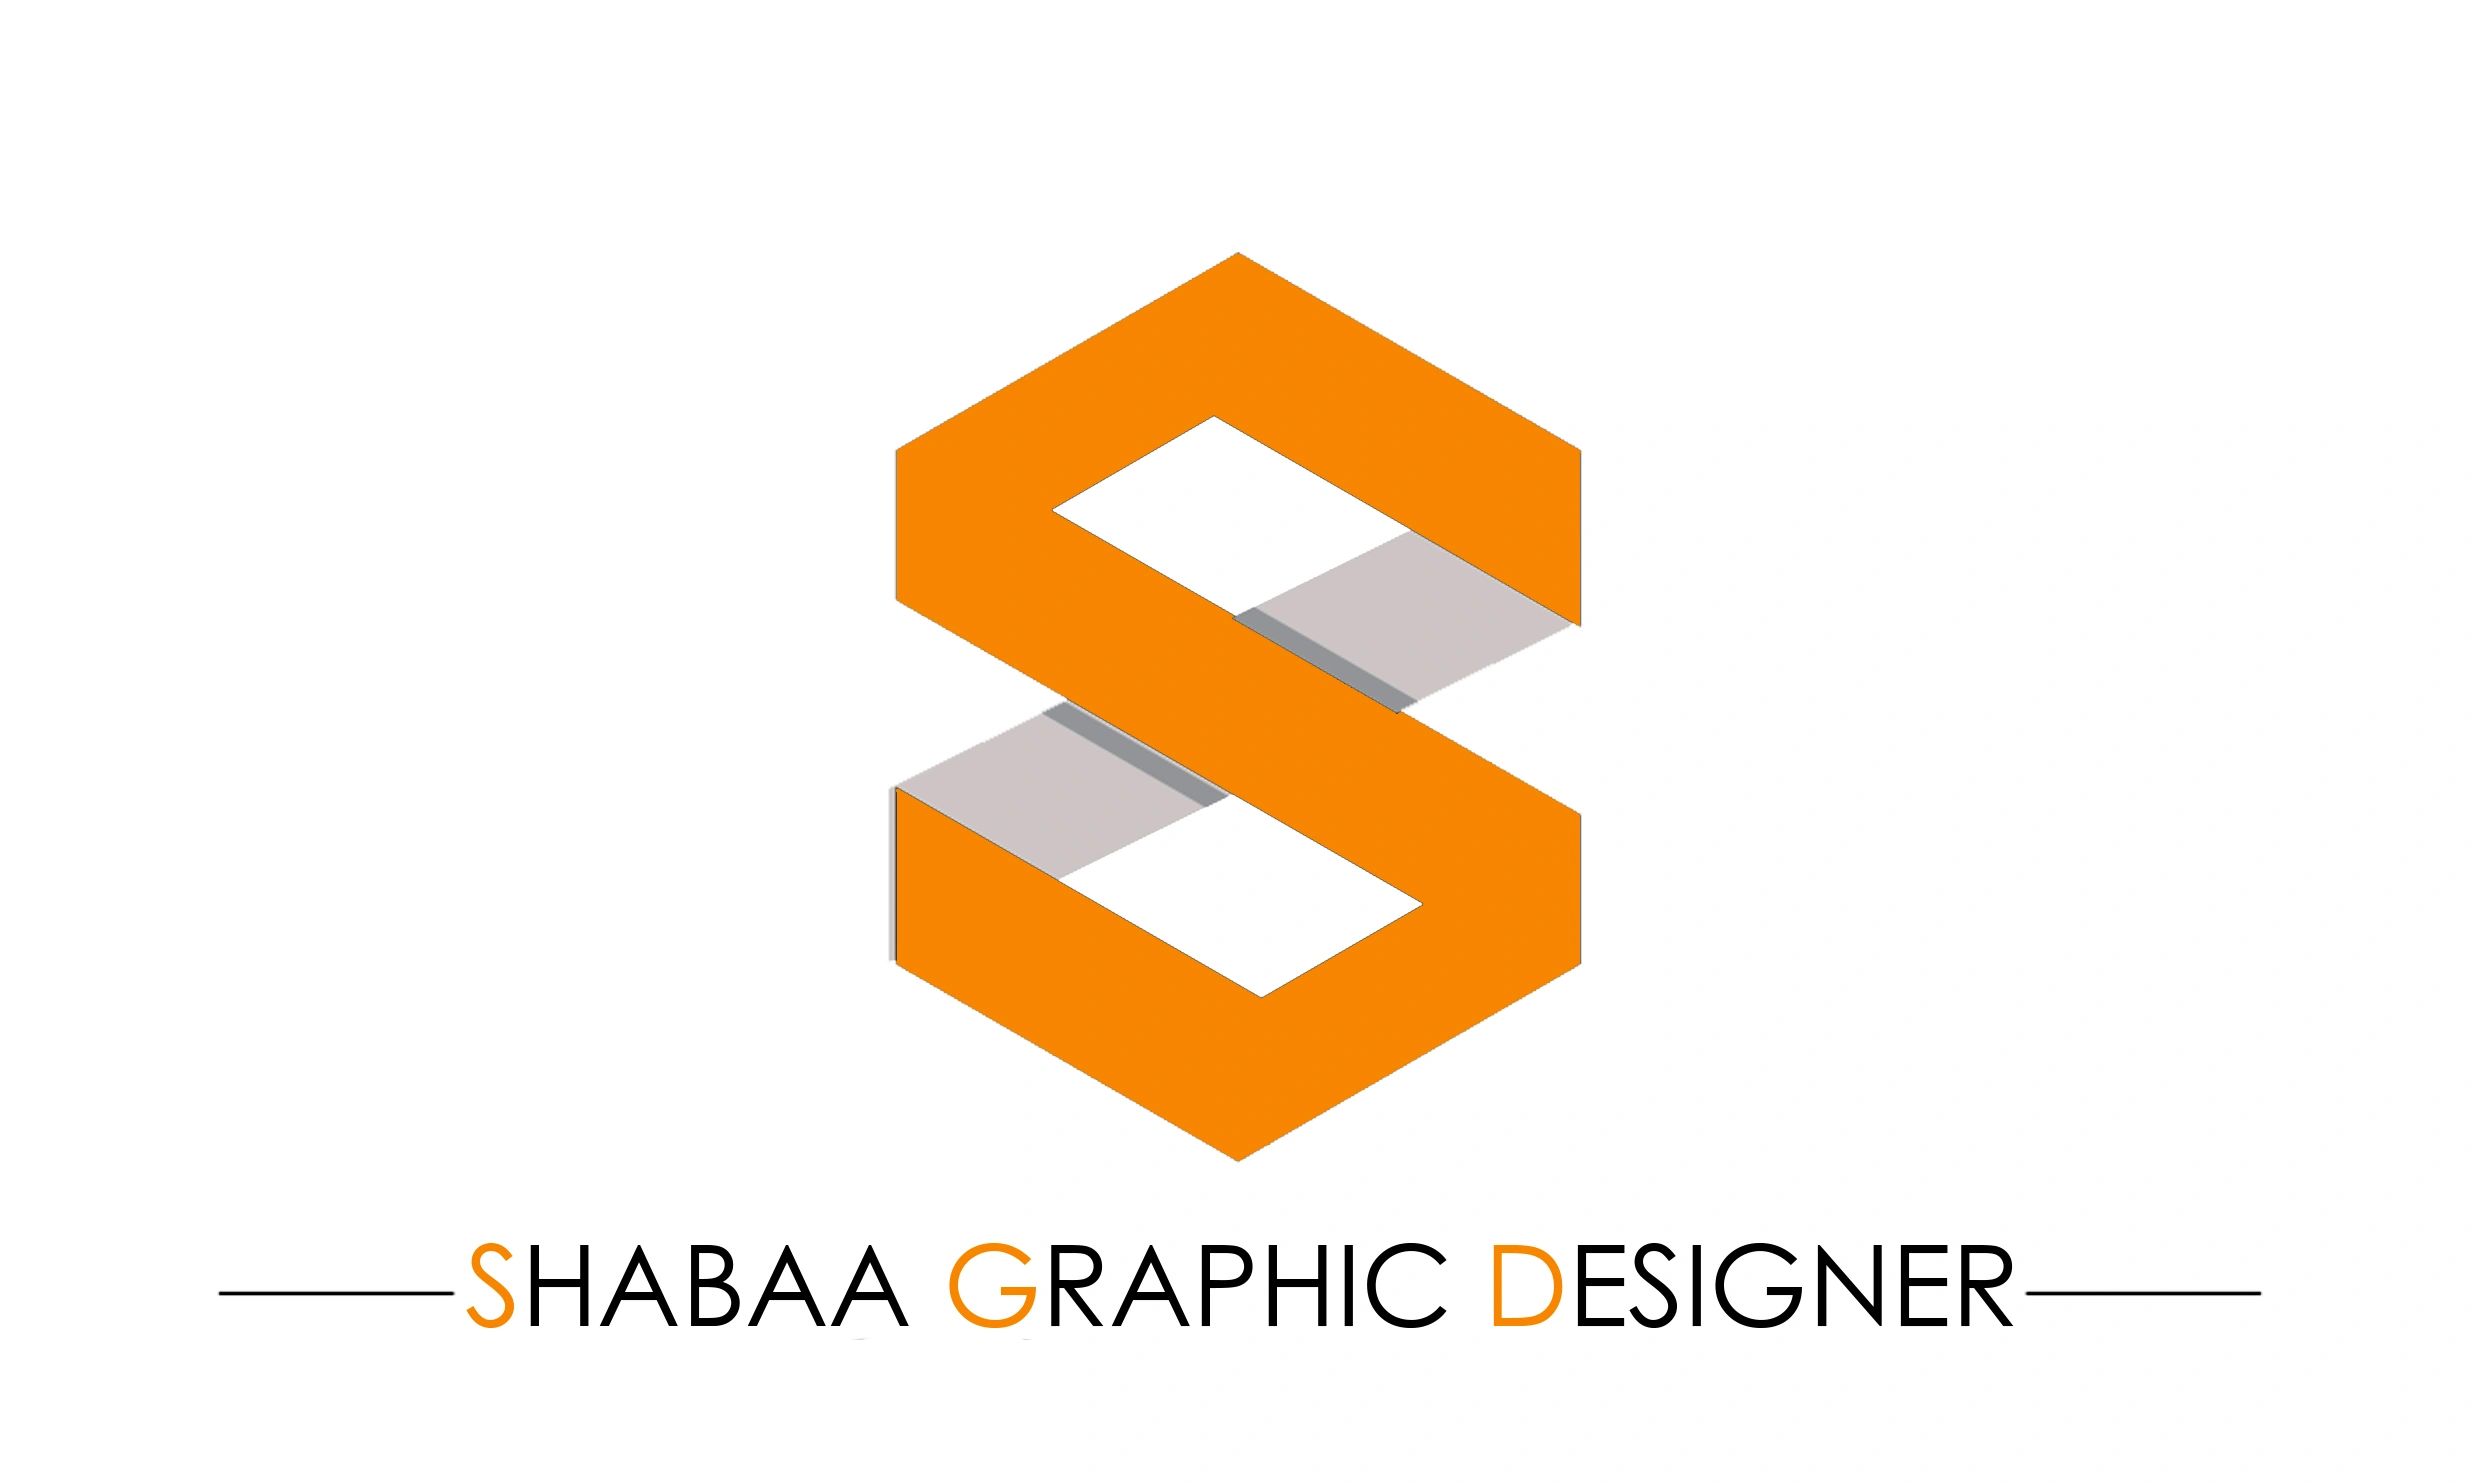 Adobe Photoshop
Illustrator 
InDesign
Web Design 
Final Cut Pro
Jawad Shabaa Designer